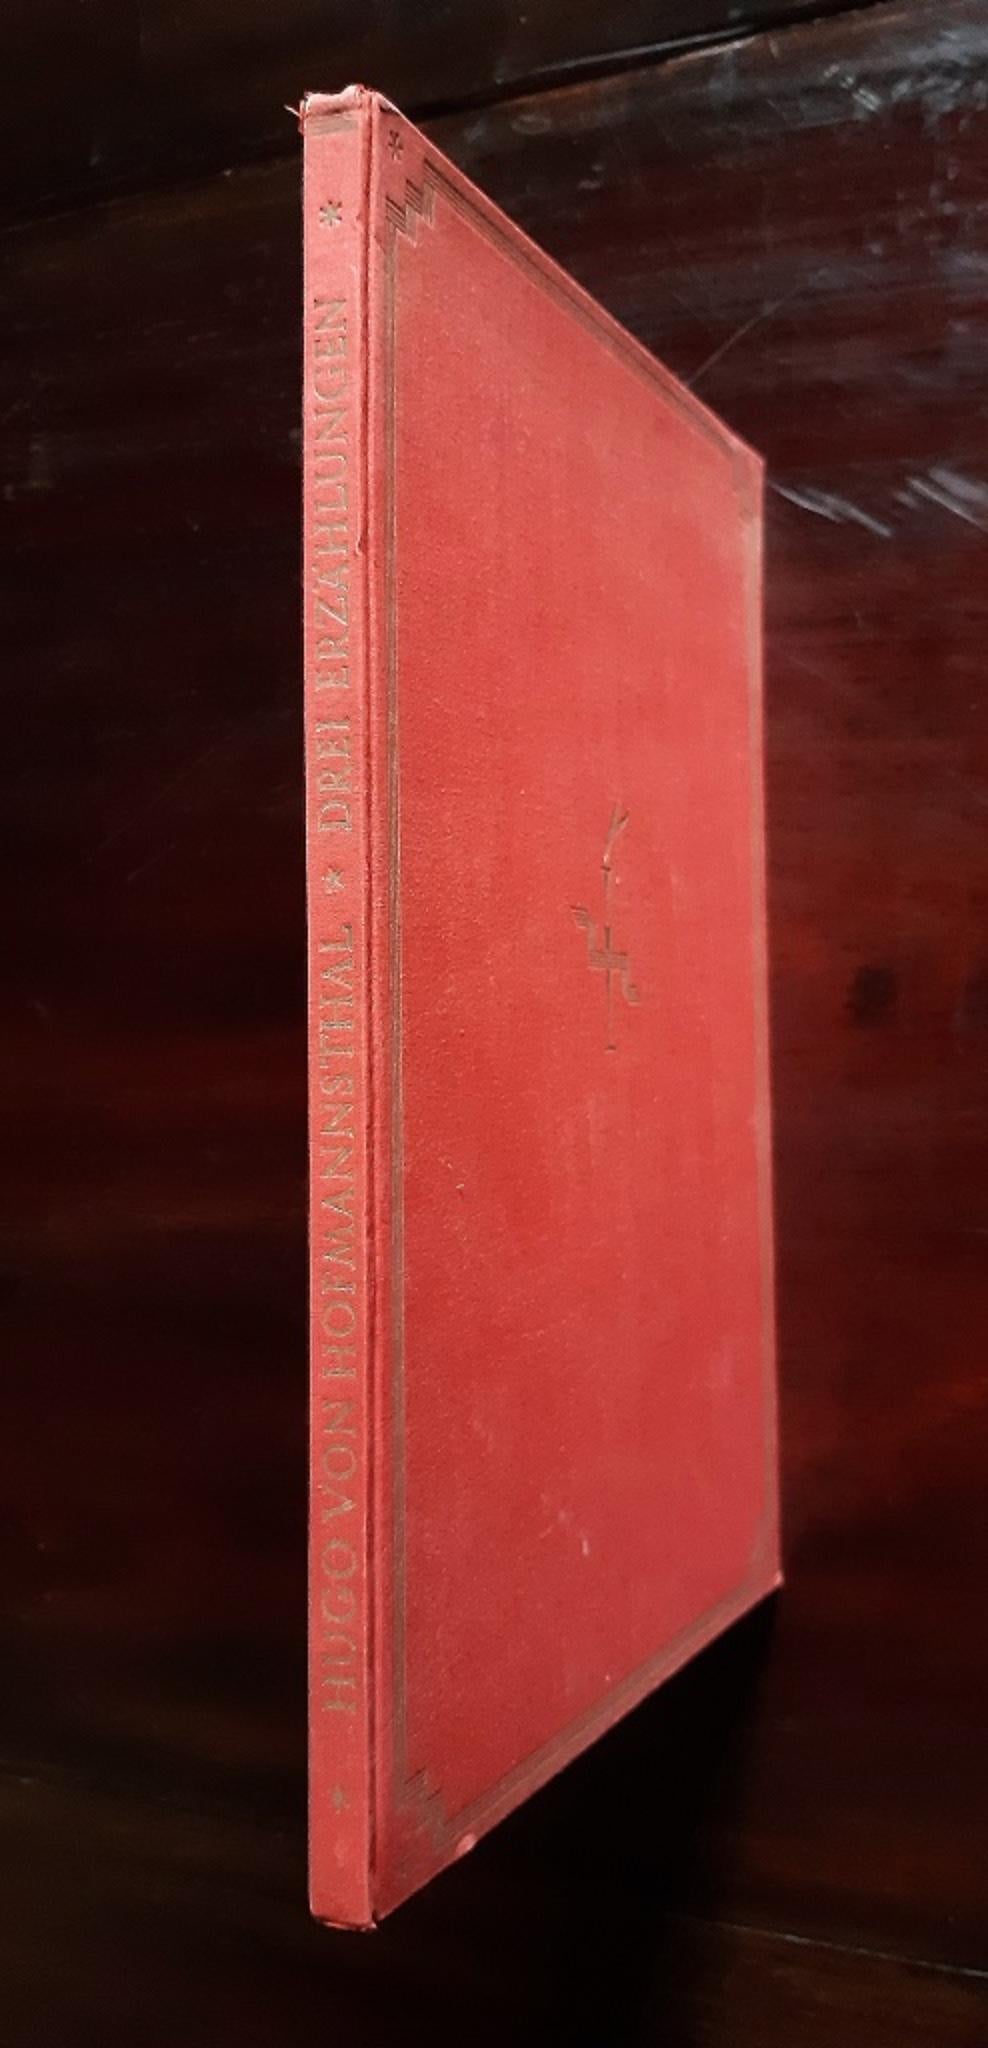 Drei Erzalhungen - Rare Book Illustrated by Alfred Kubin - 1927 - Symbolist Art by Alfred Leopold Isidor Kubin